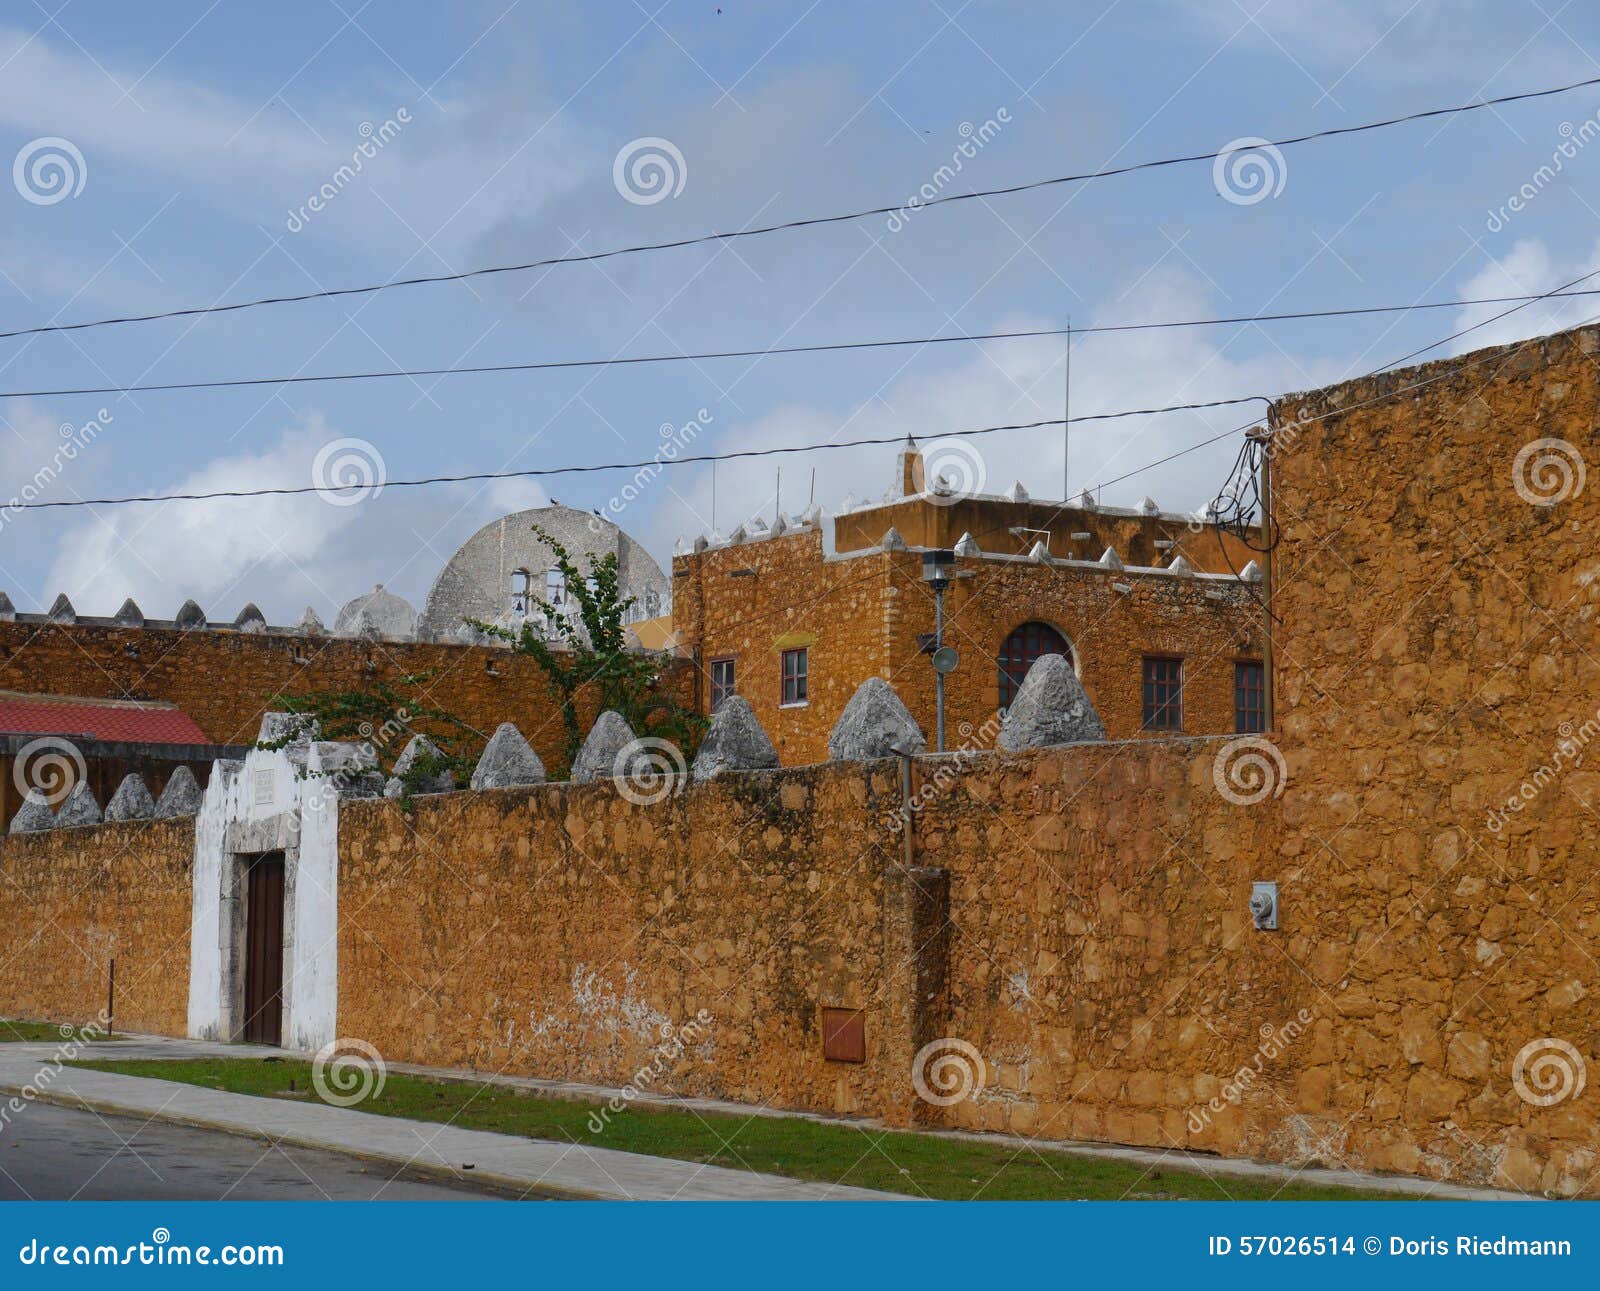 mexiko houses colonial old stil merida